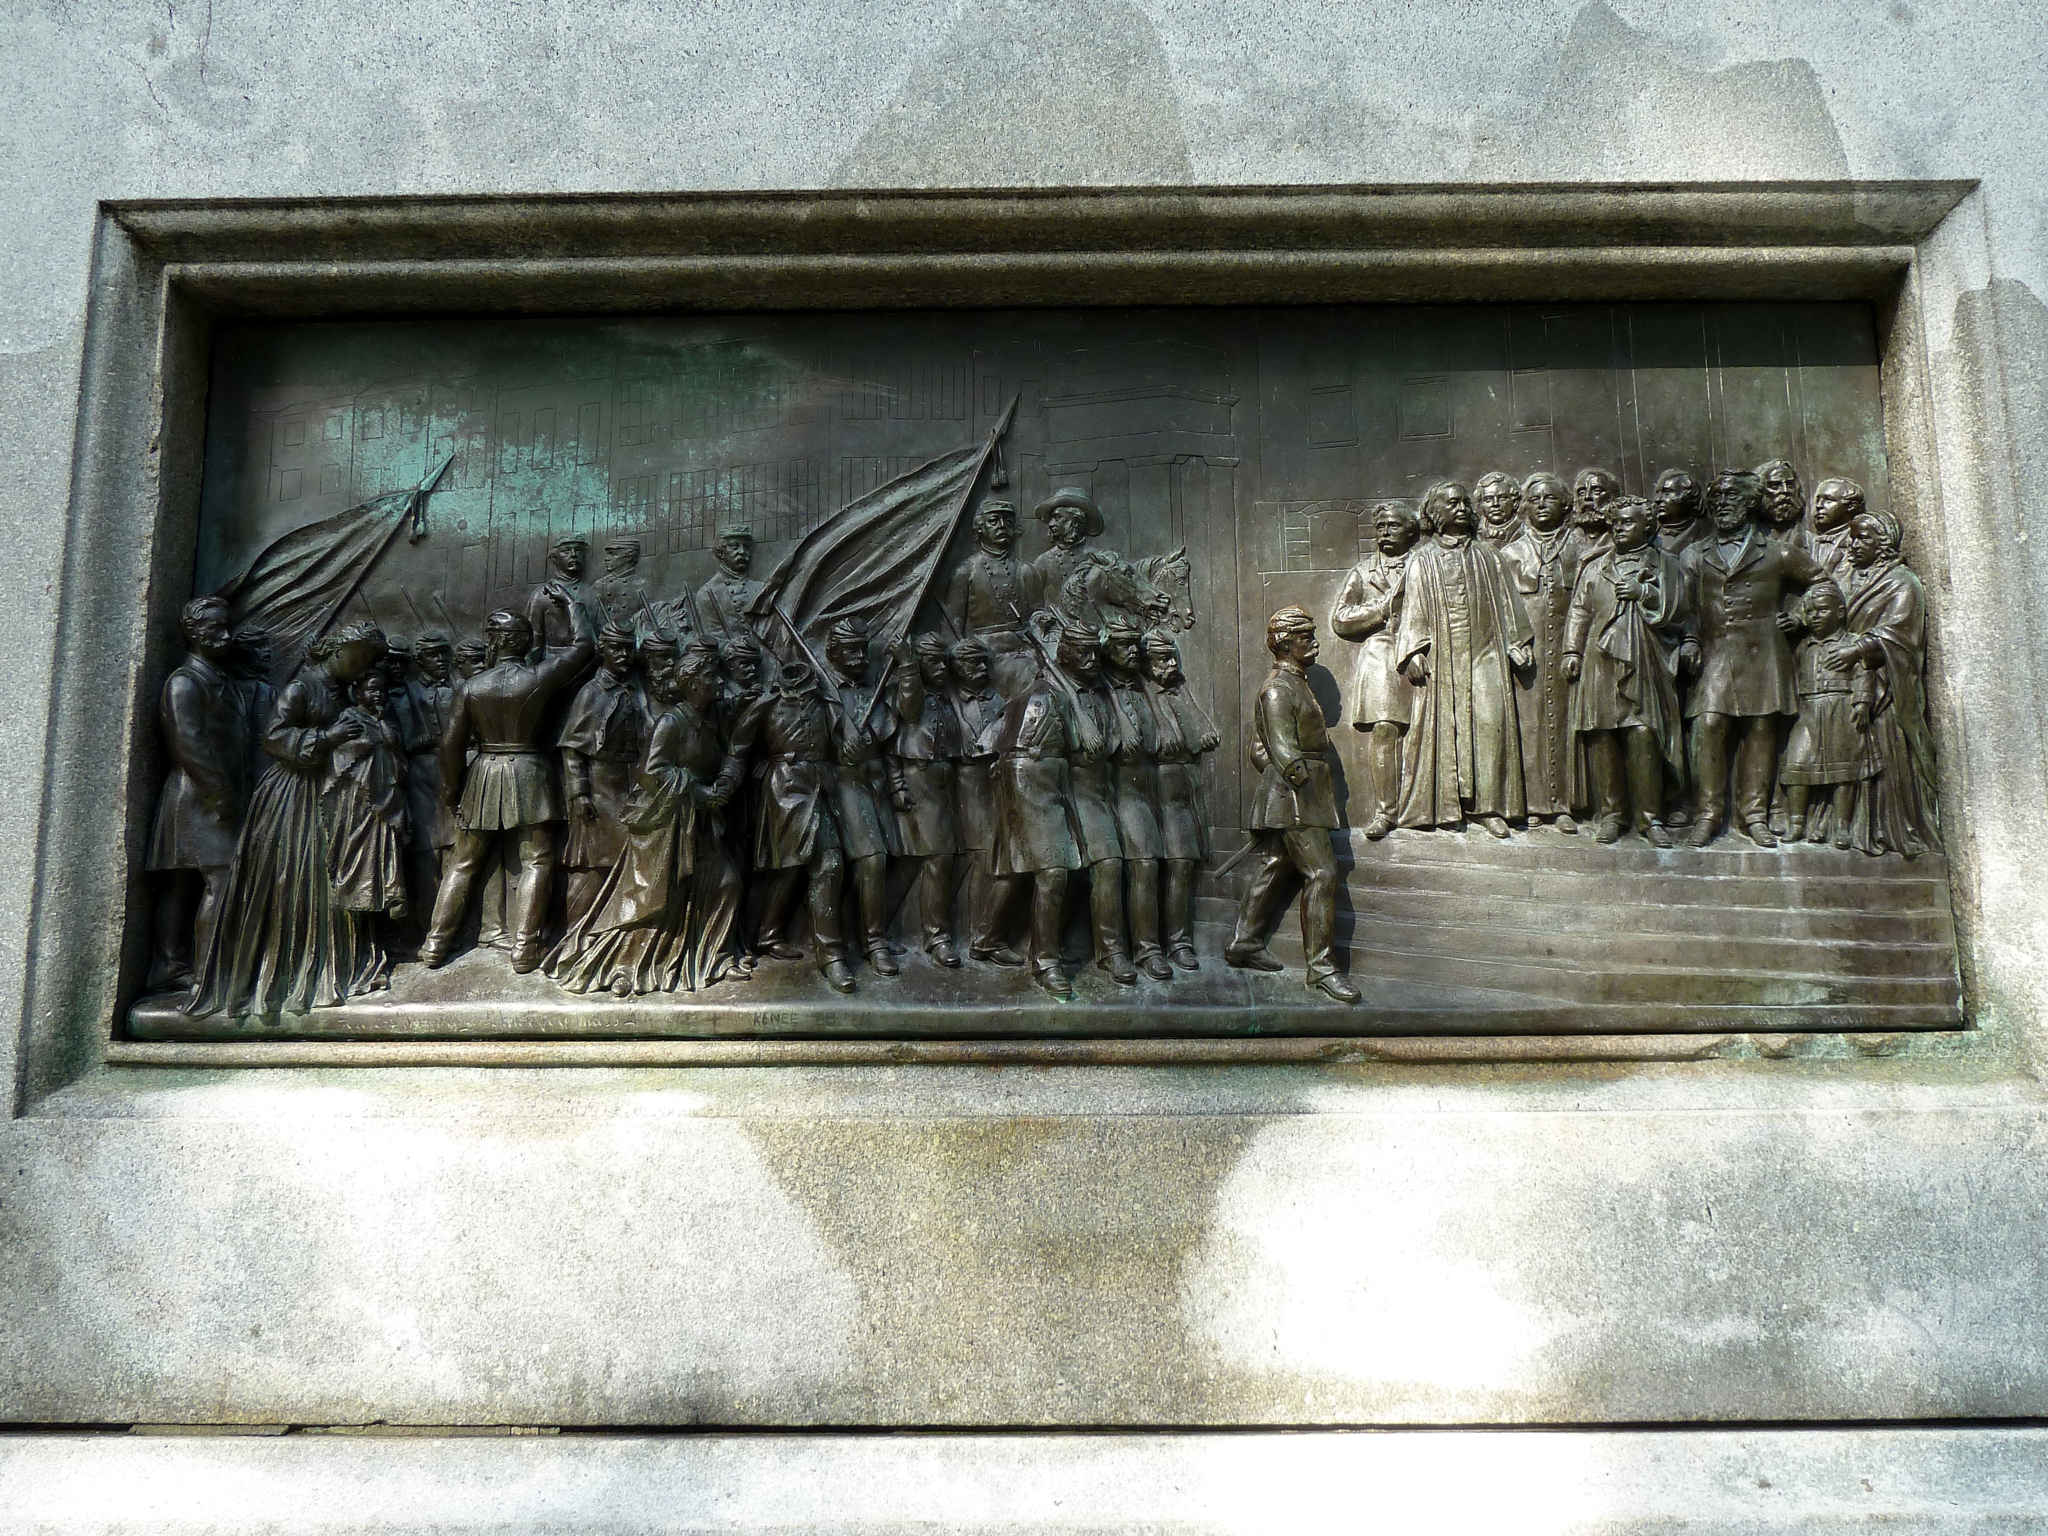 soldiers-sailors-monument-bas-relief-boston-common